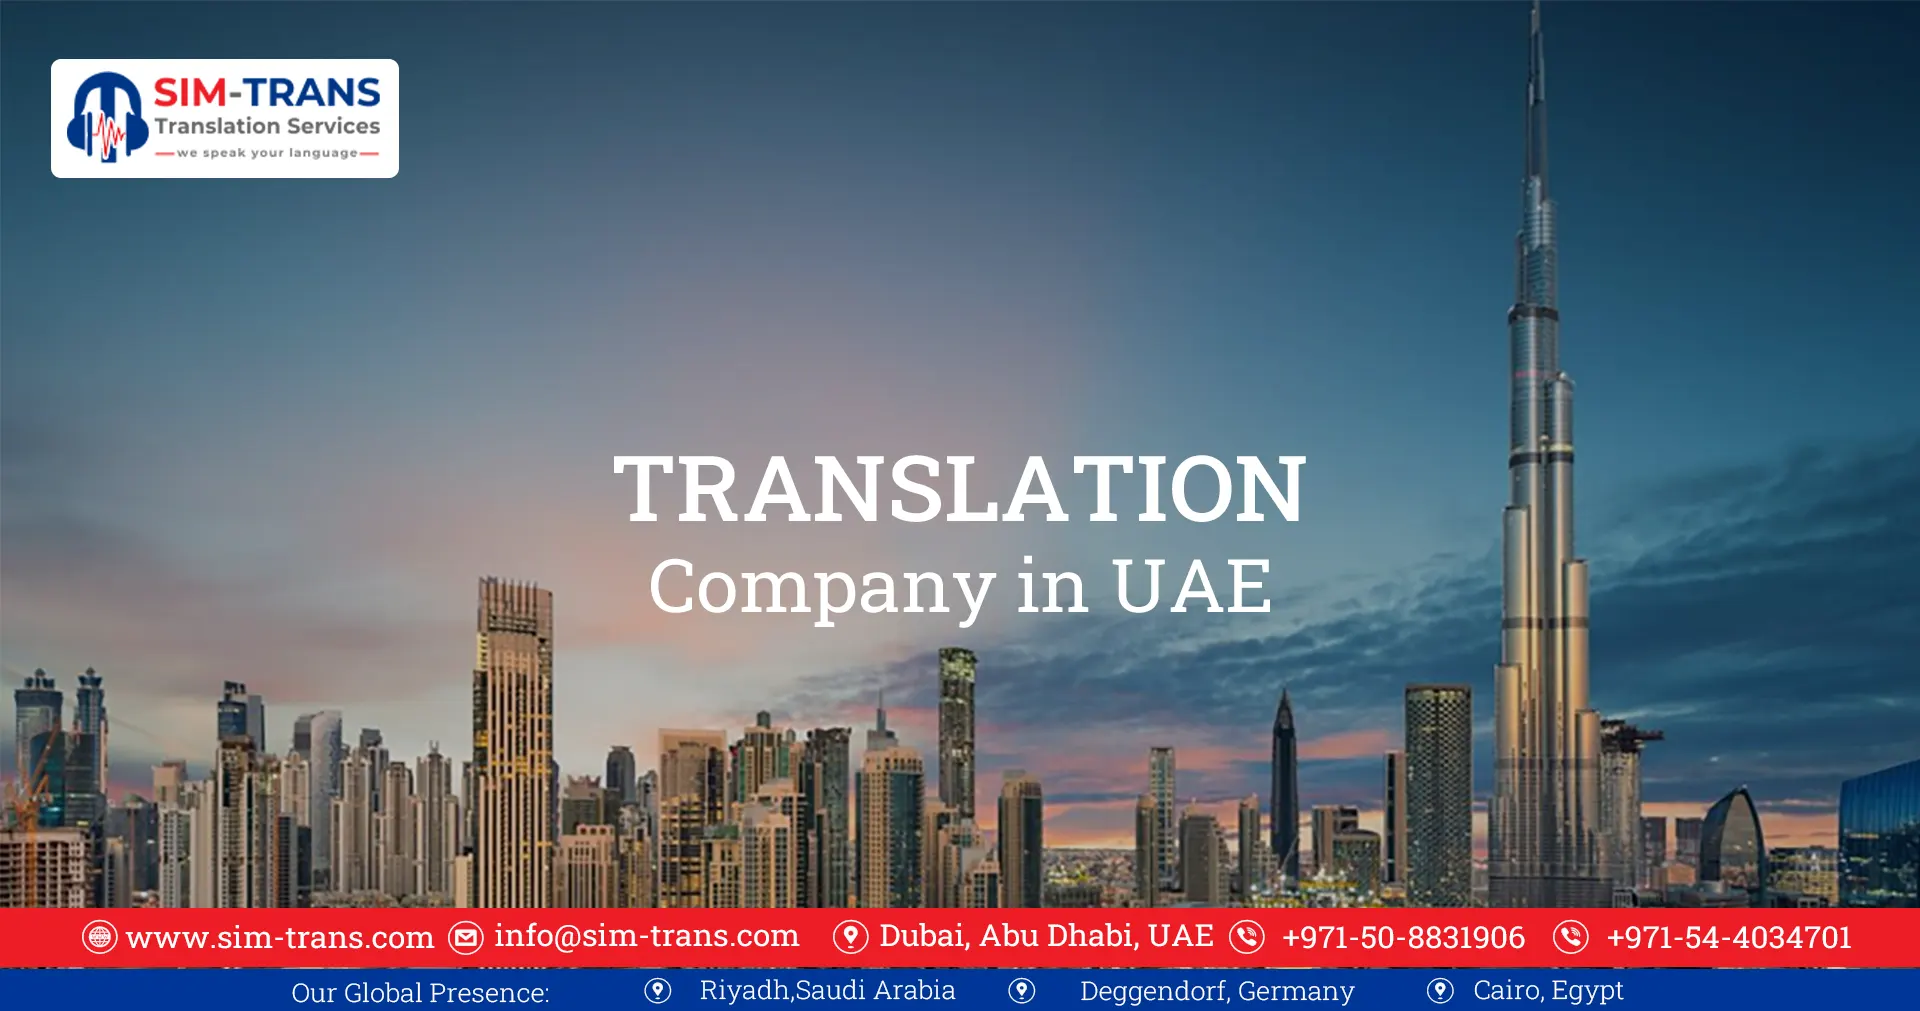 Premier Translation Company in Dubai: Navigate Global Communication with Sim-trans